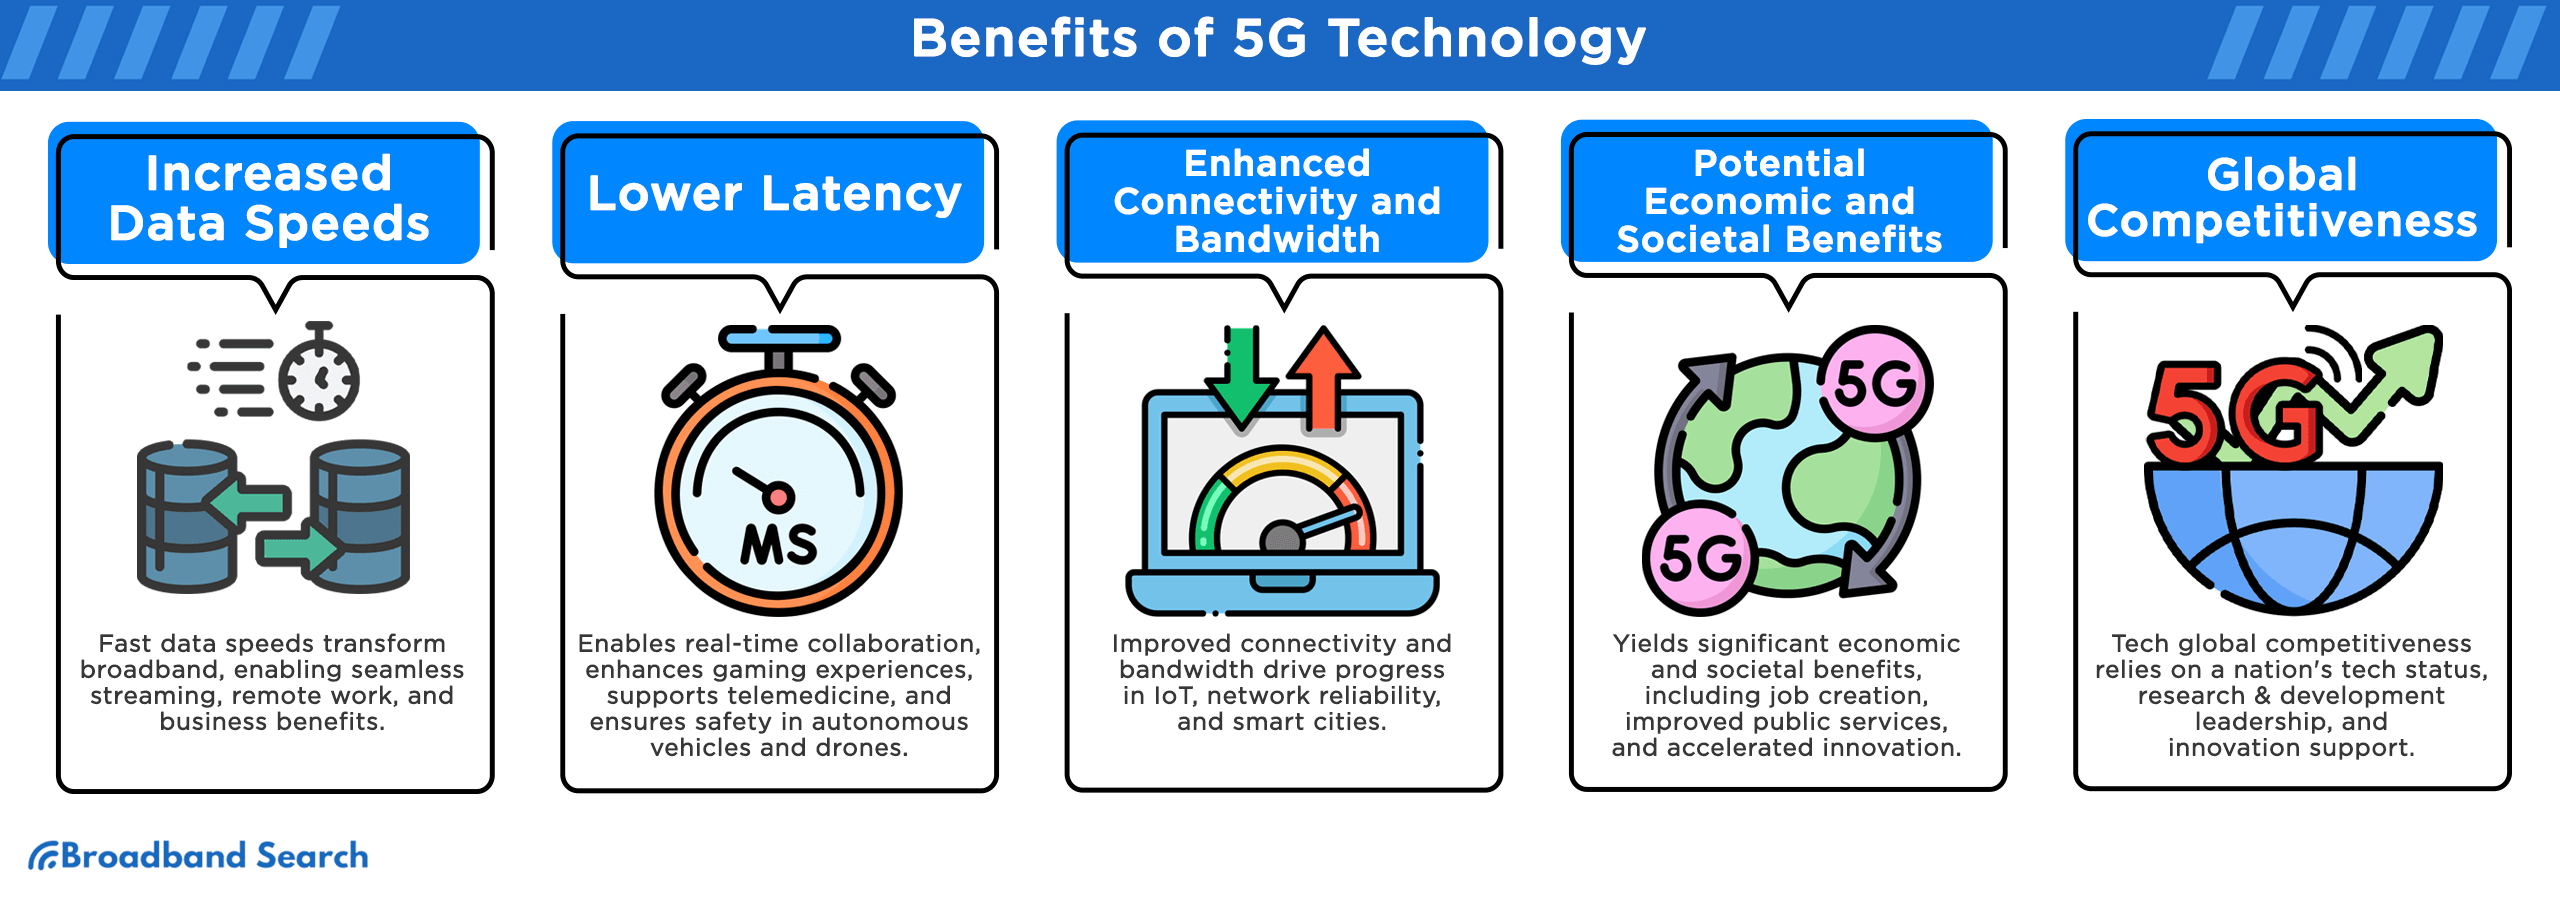 Benefits of 5G technology